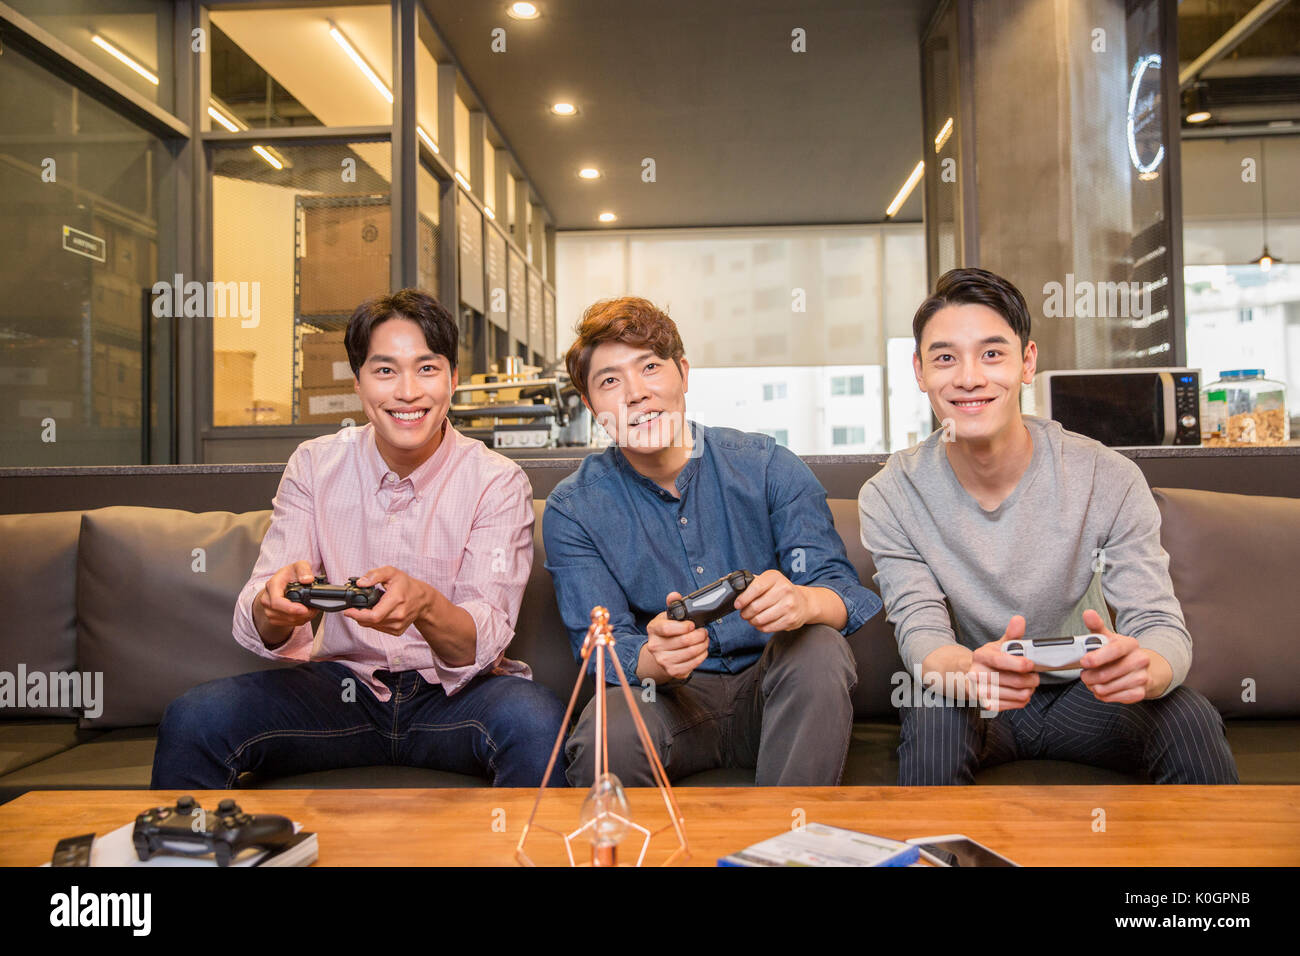 Three smiling businessmen enjoying video games Stock Photo